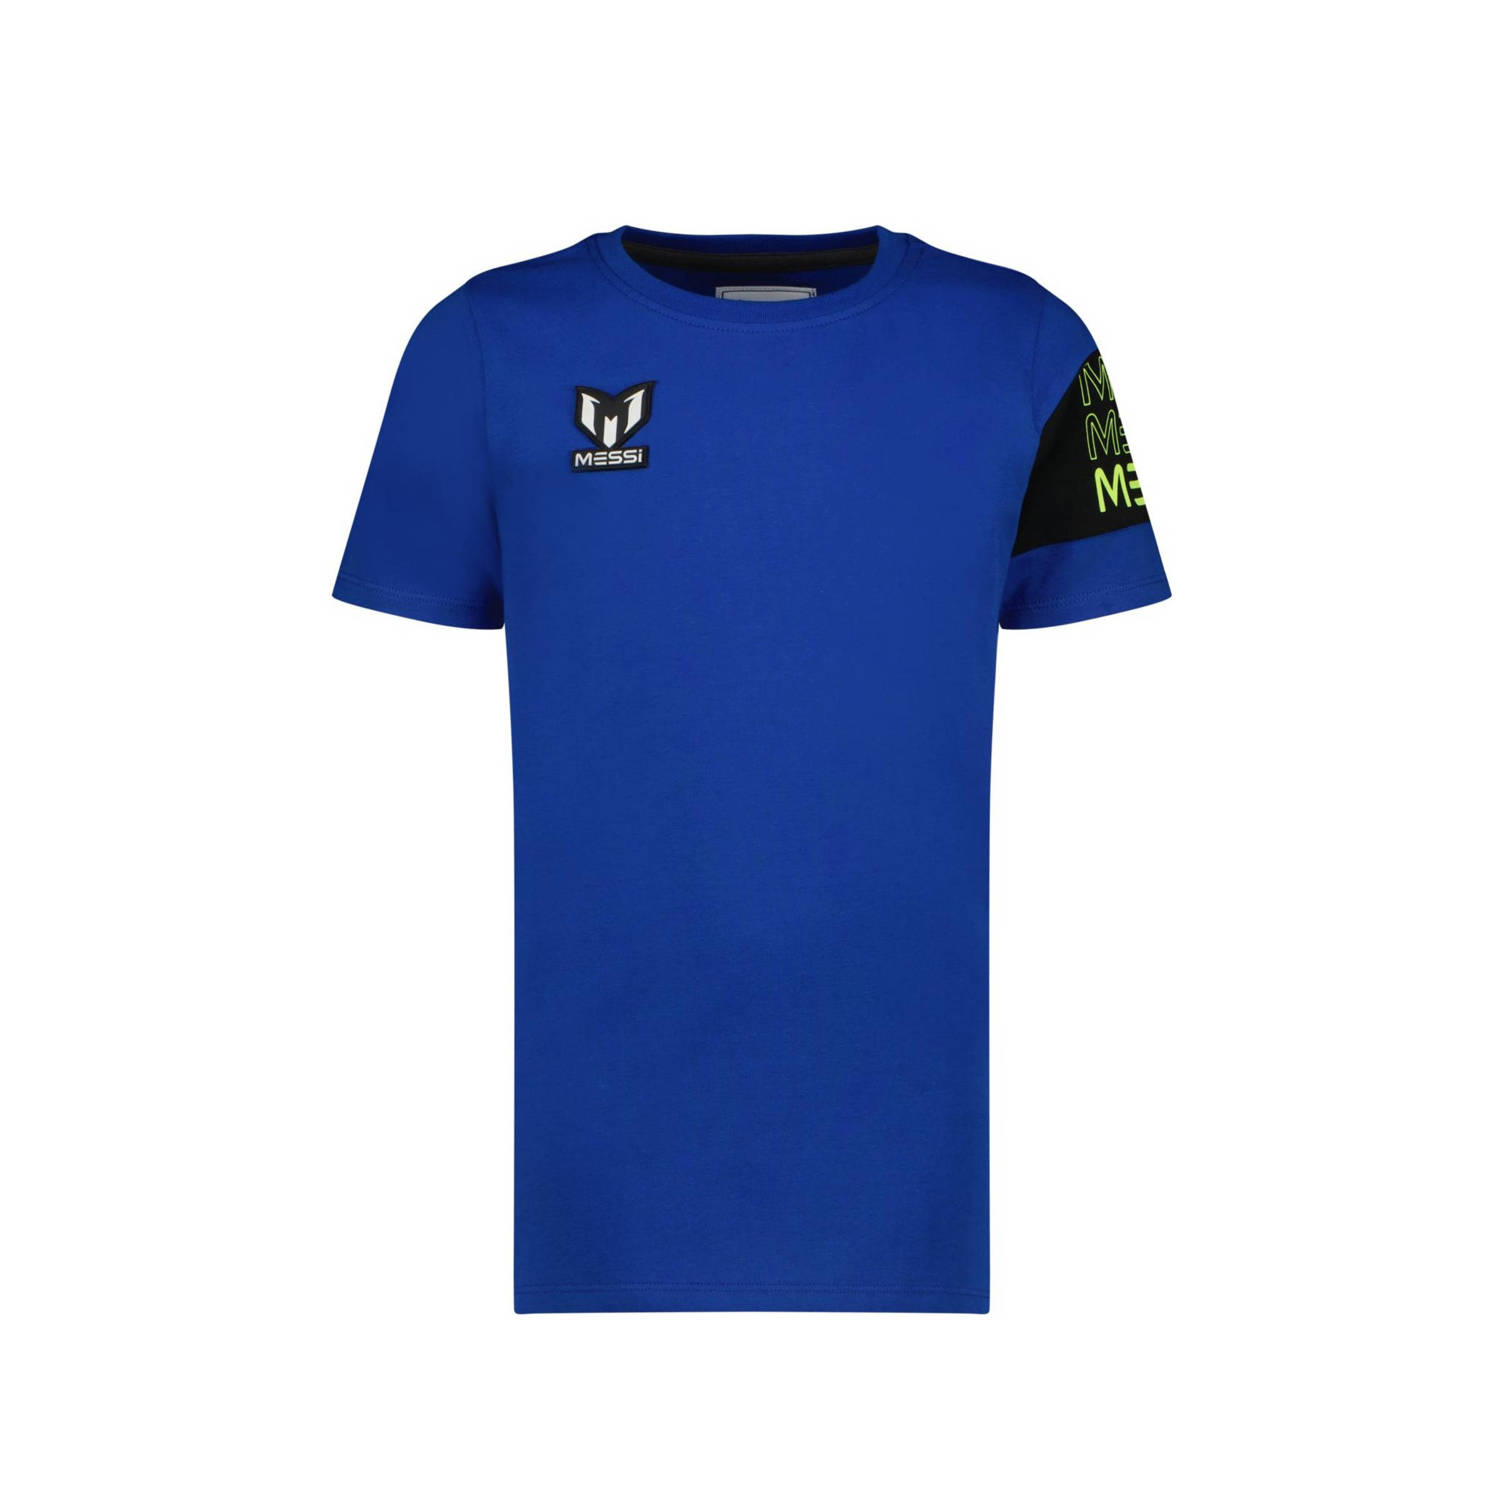 VINGINO x Messi T-shirt Jumal met logo hardblauw Stretchkatoen Ronde hals 104